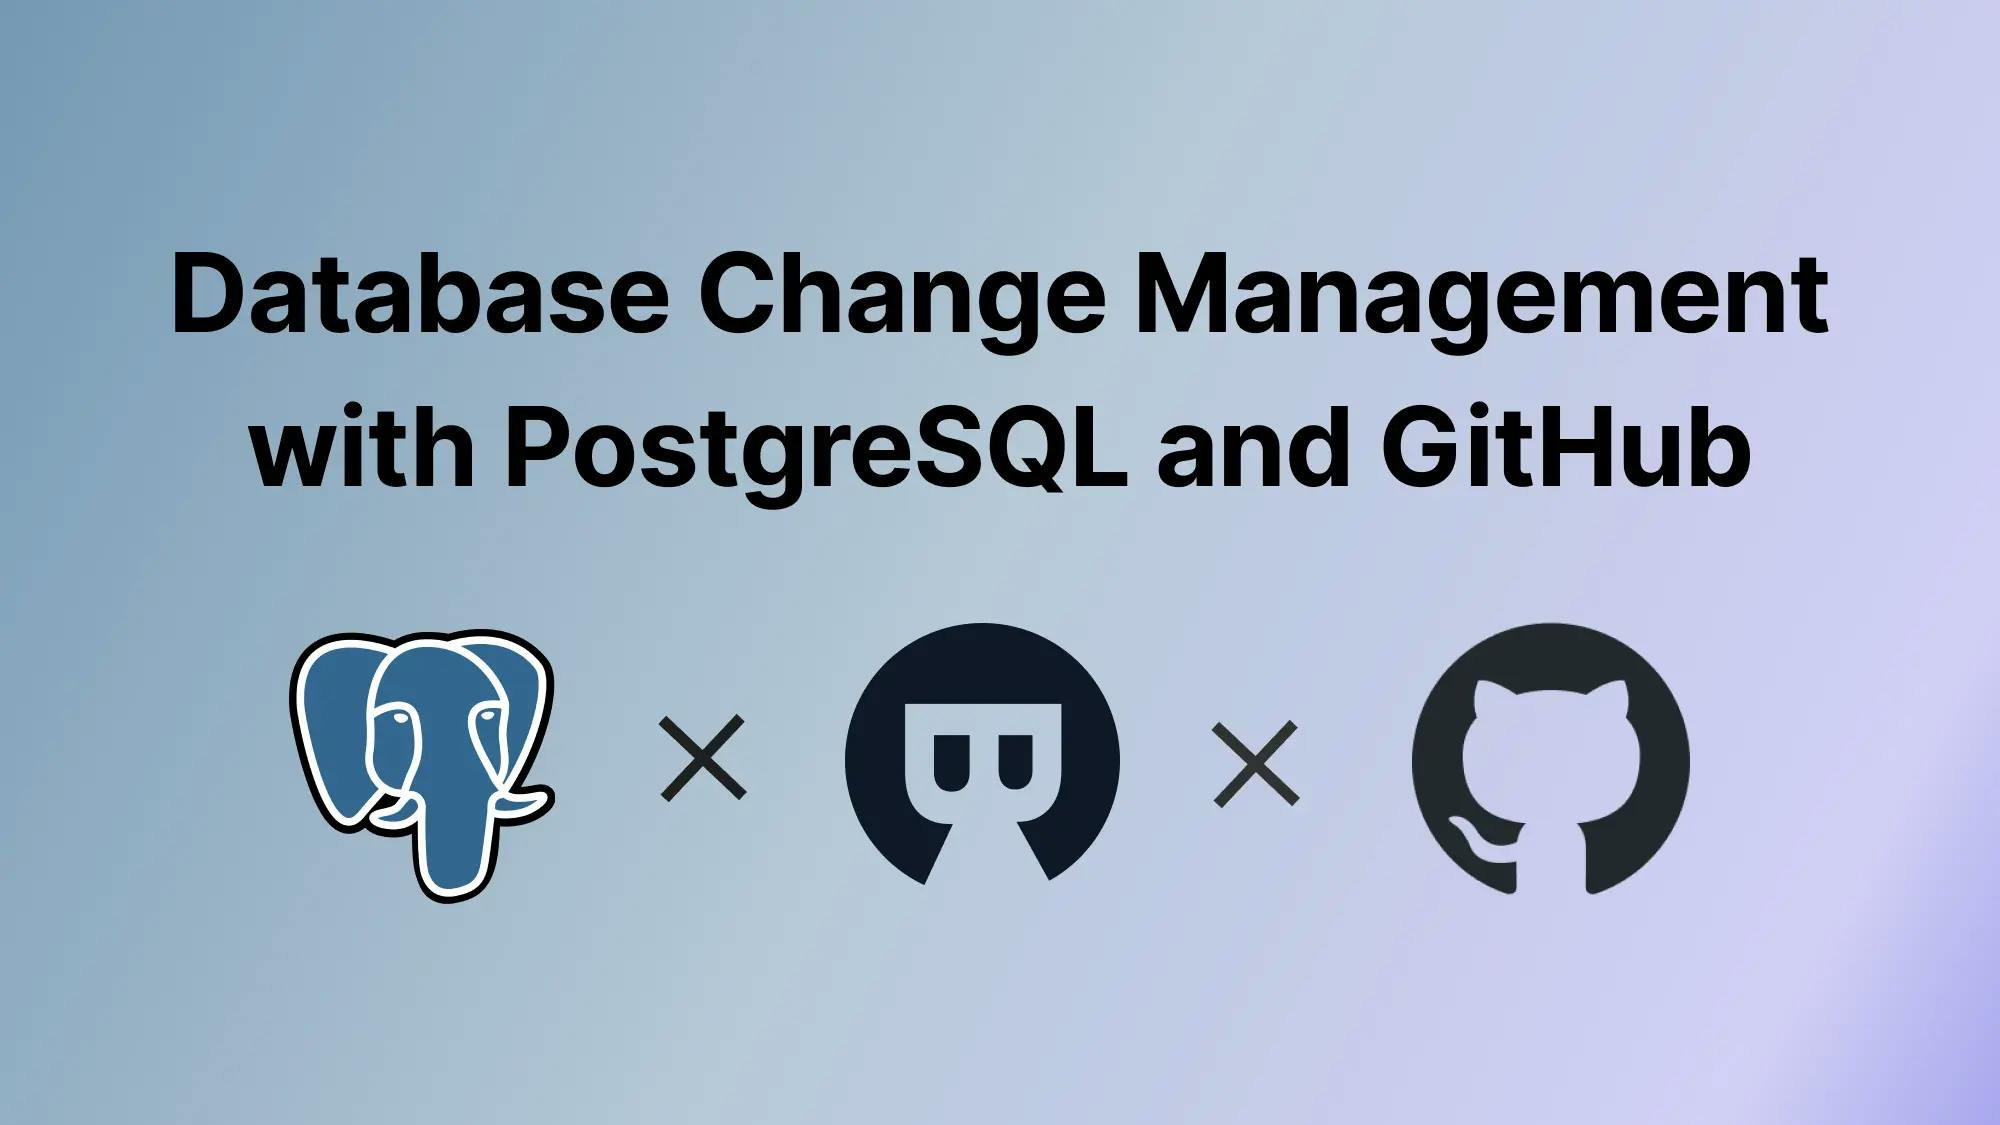 DevOps: Database Change Management with PostgreSQL and GitHub